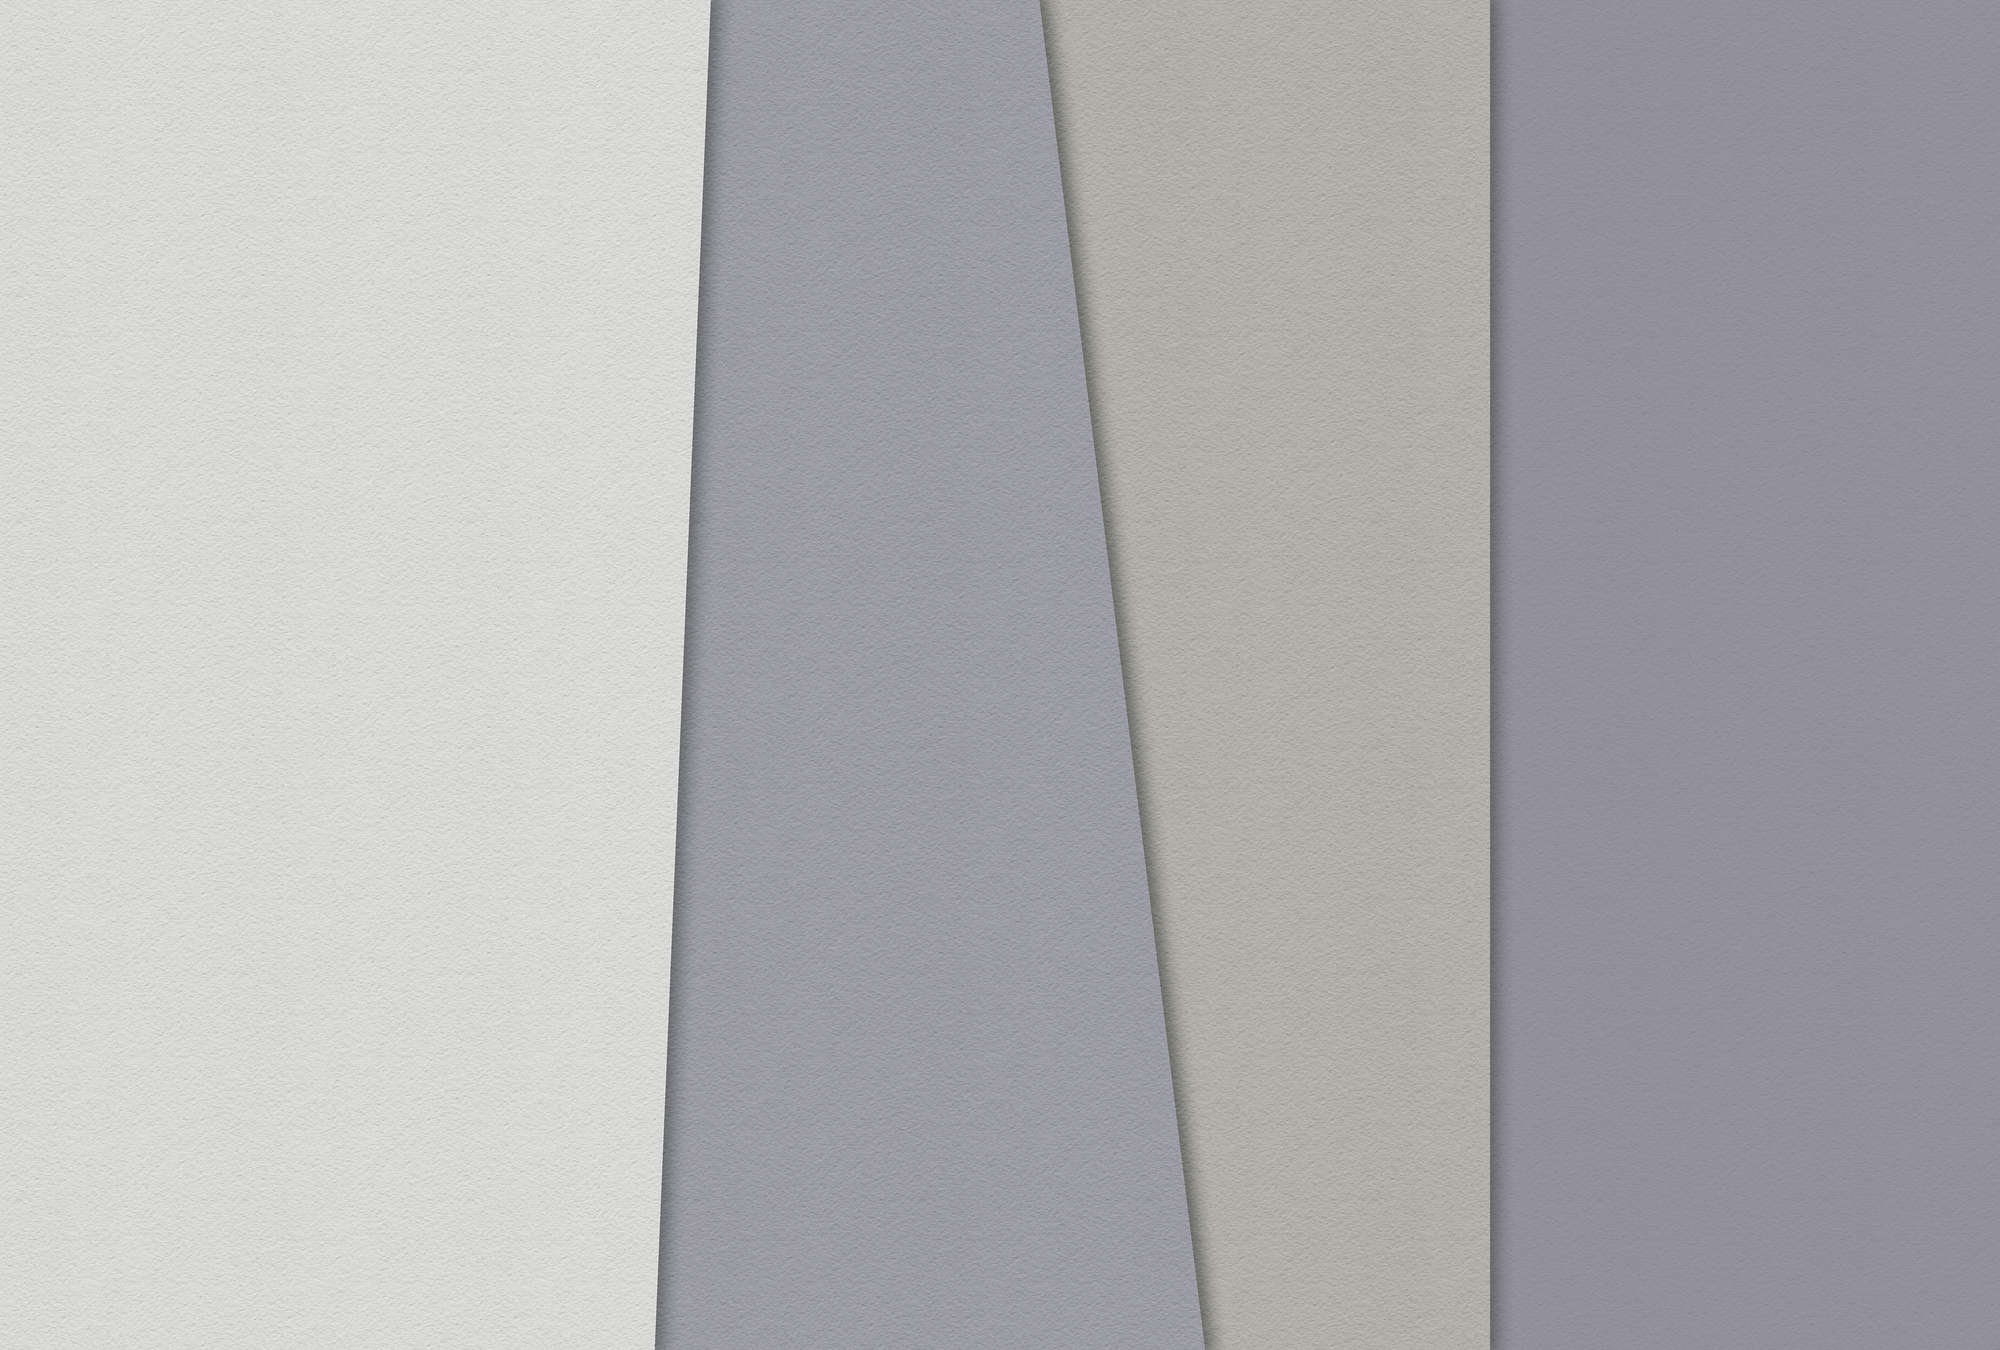             Carta stratificata 2 - Carta da parati grafica, struttura in carta fatta a mano dal design minimalista - crema, verde | perla in pile liscio
        